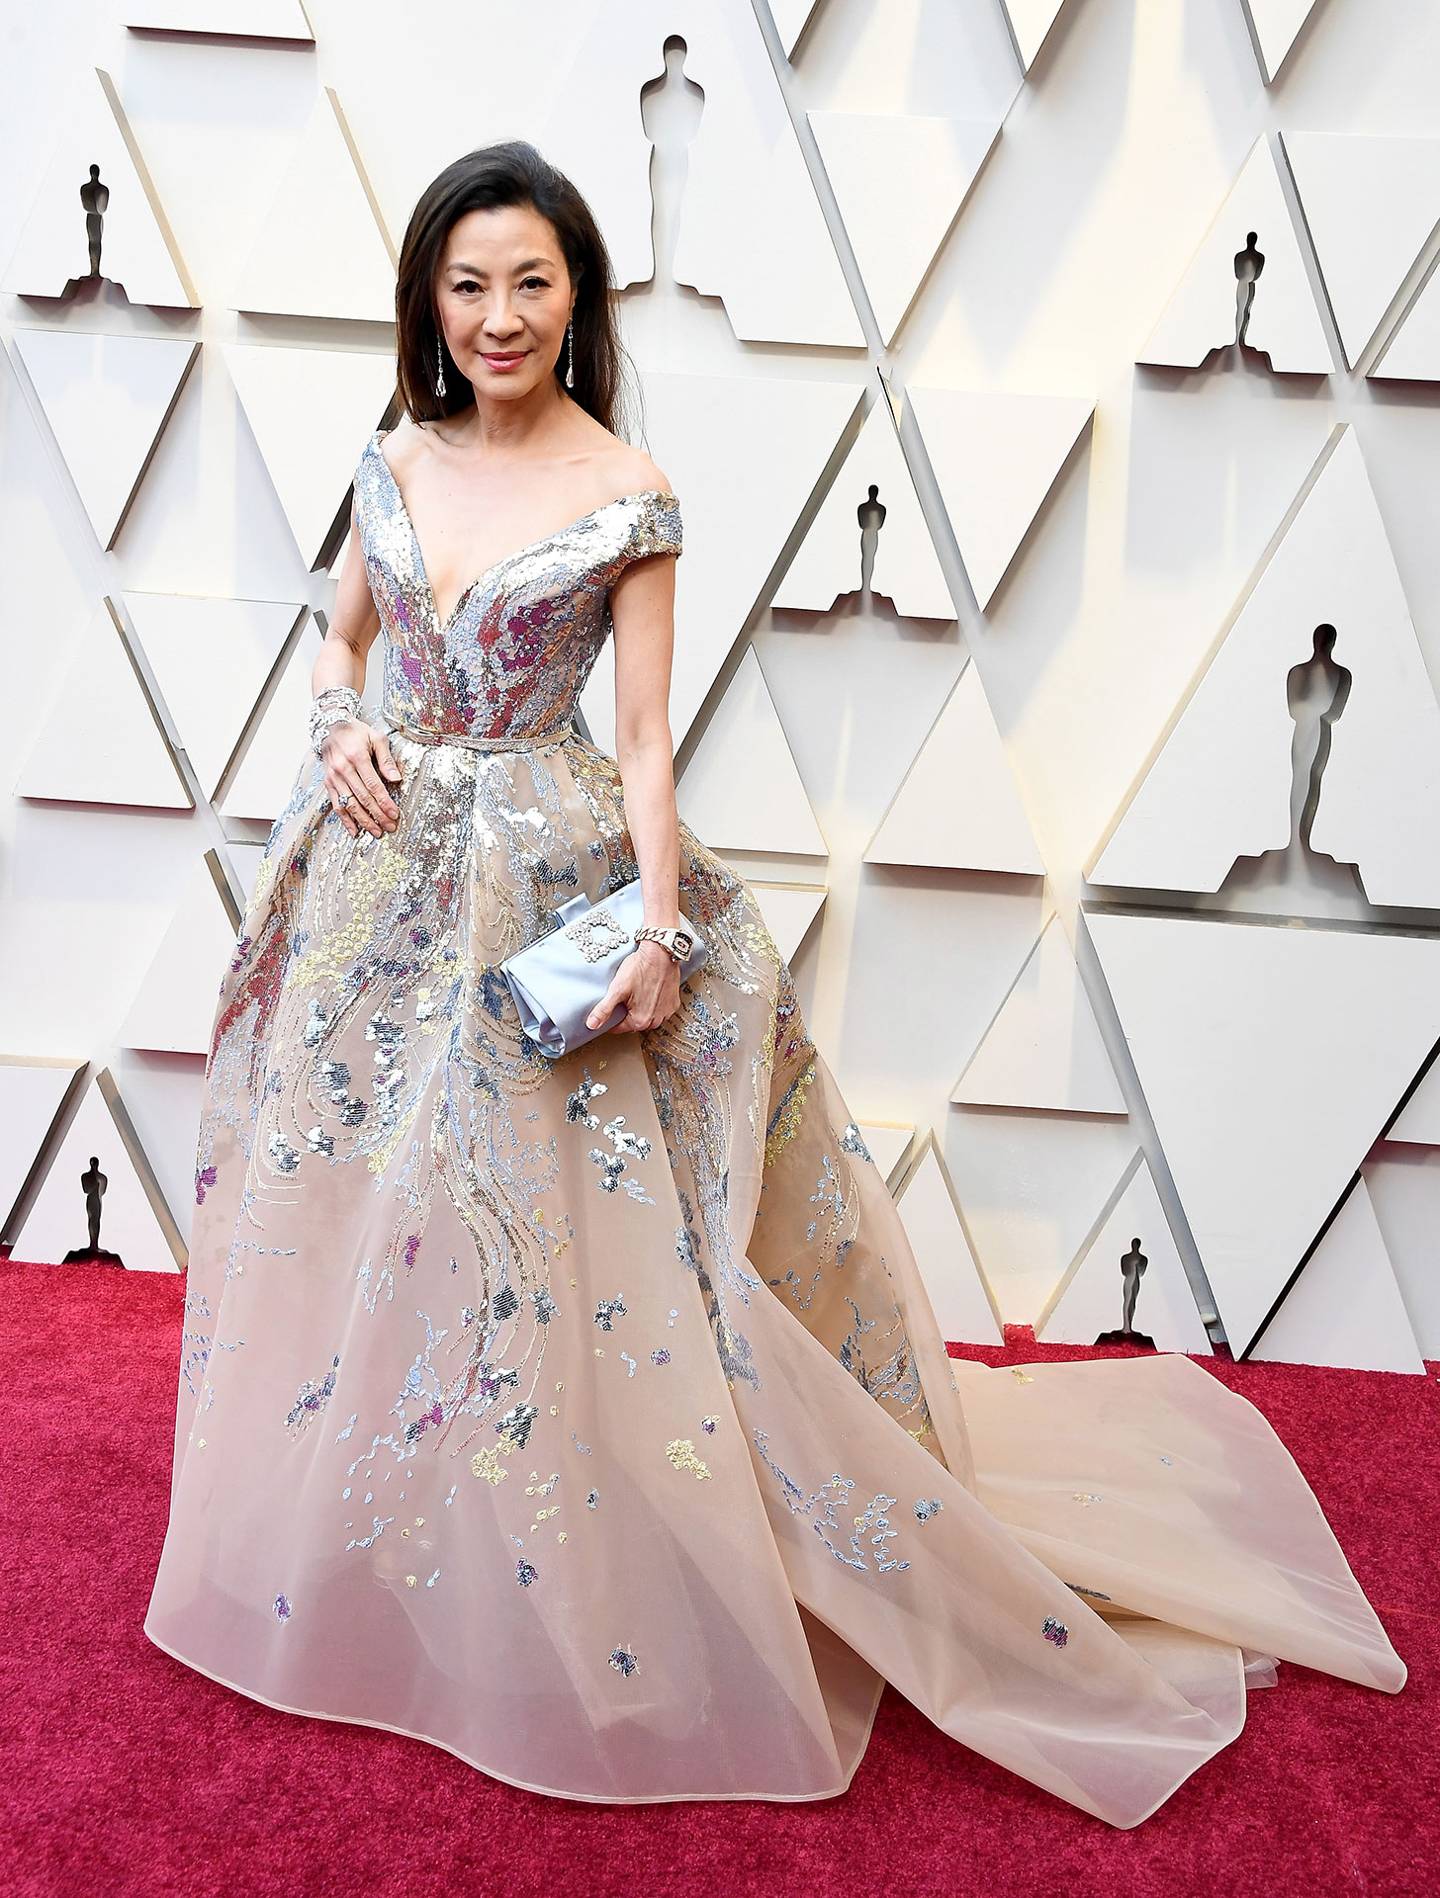 Oscars Best Dressed 2019 - Michelle Yeoh in Elie Saab